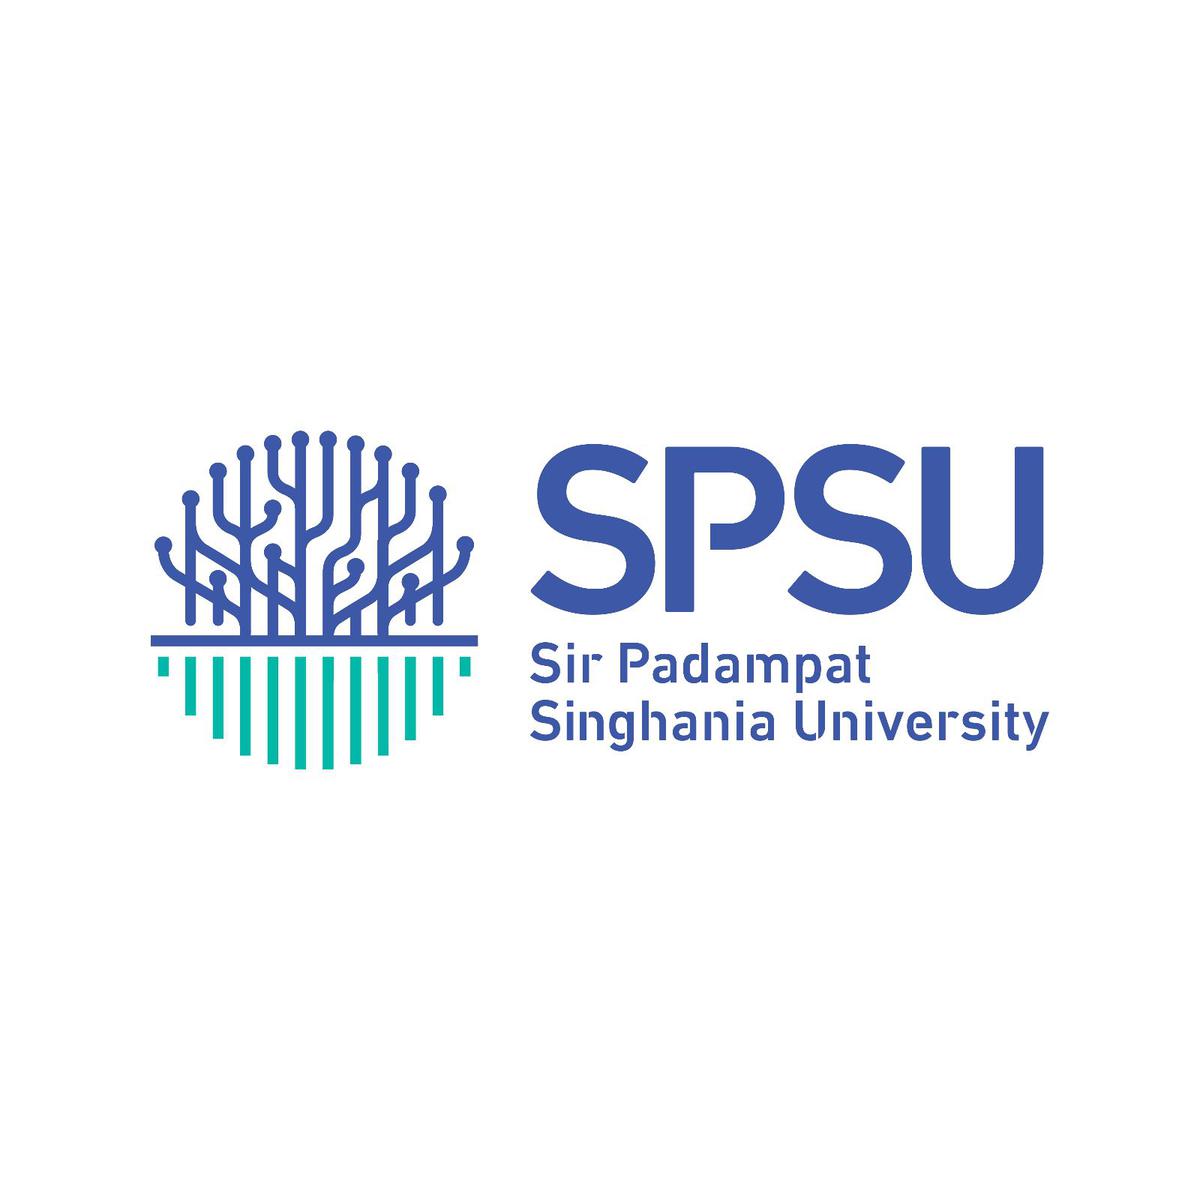 Image_1_-_JK_Cement’s_Sir_Padampat_Singhania_University_reveals_new_brand_logo.jpg